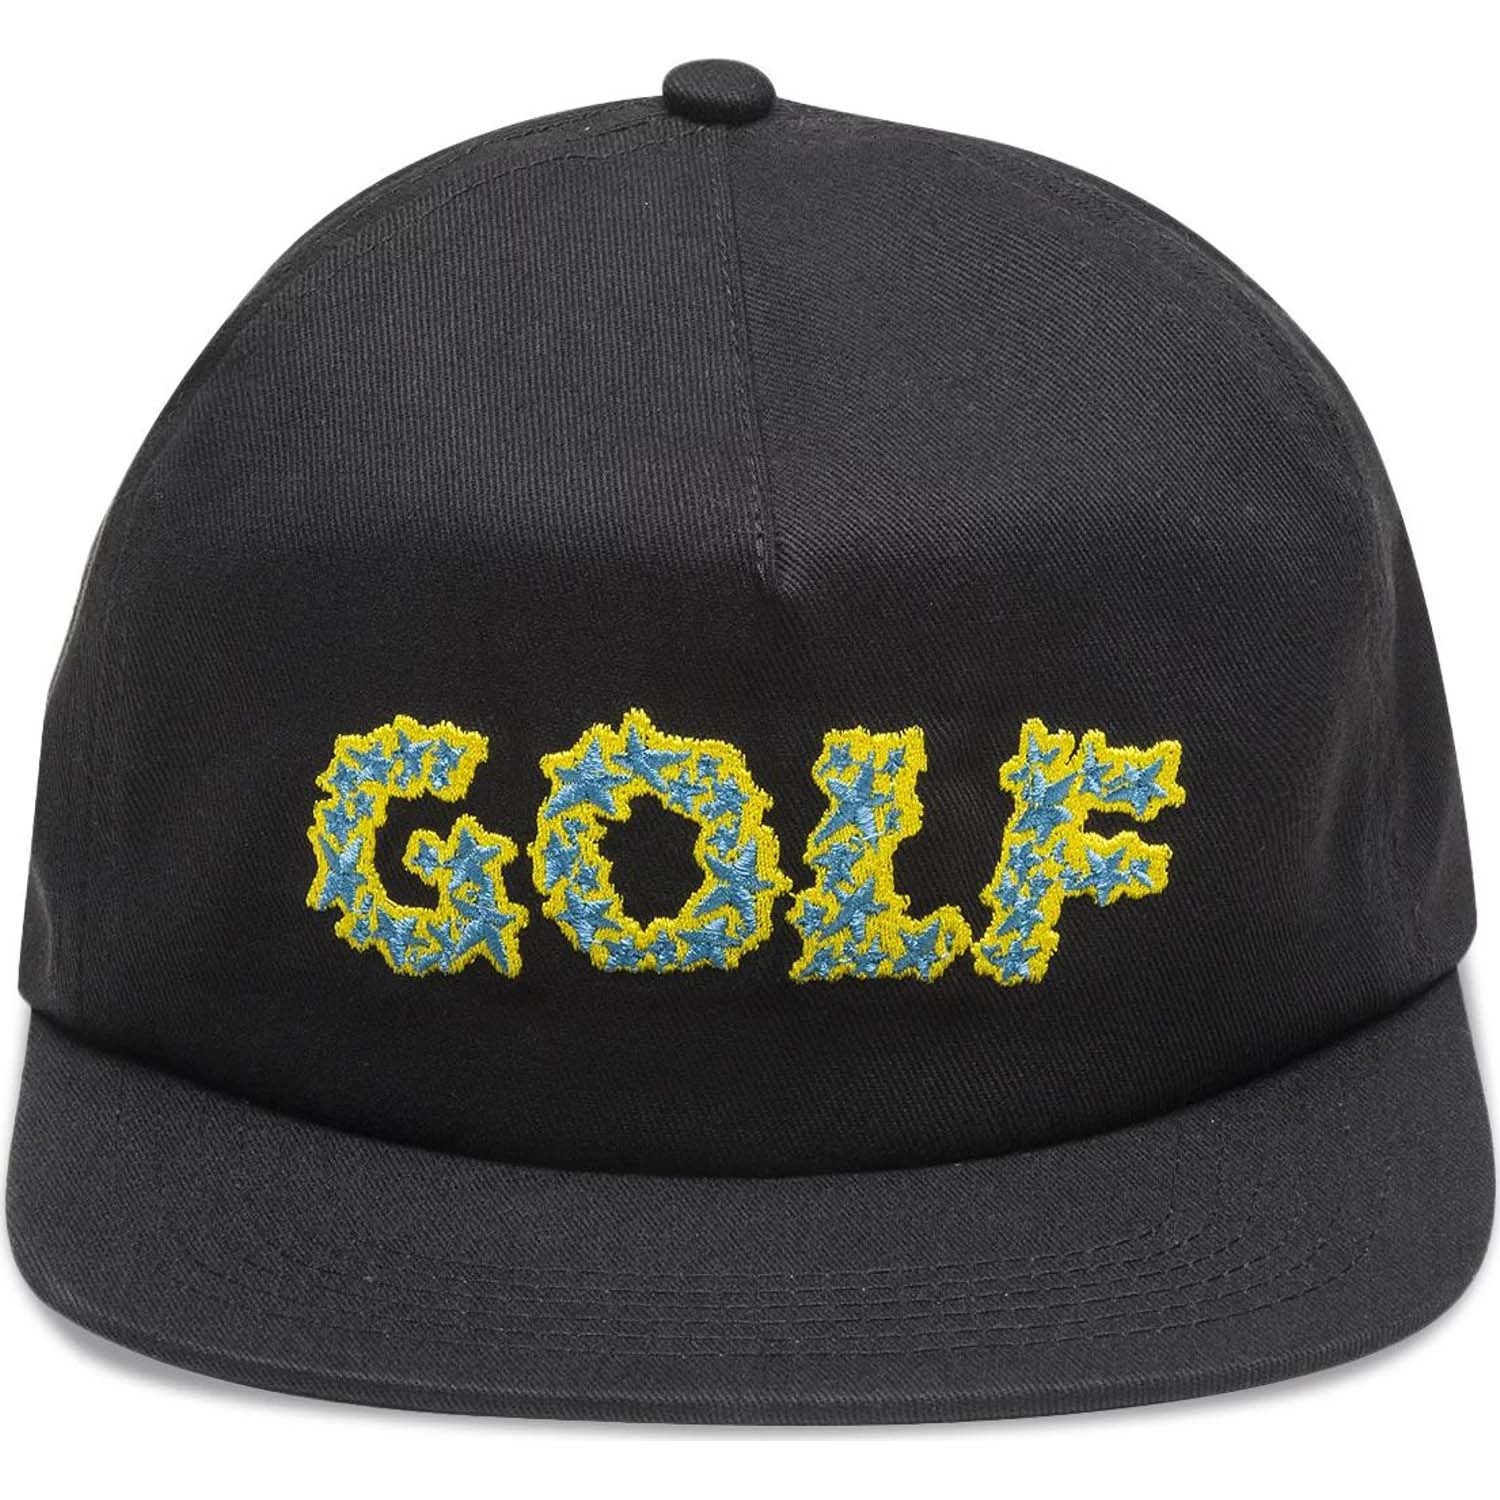 Бейсболка Golf Wang Galaxy Snapback, черный pgm indoor golf golf putting trainer practice blanket adjustable slope